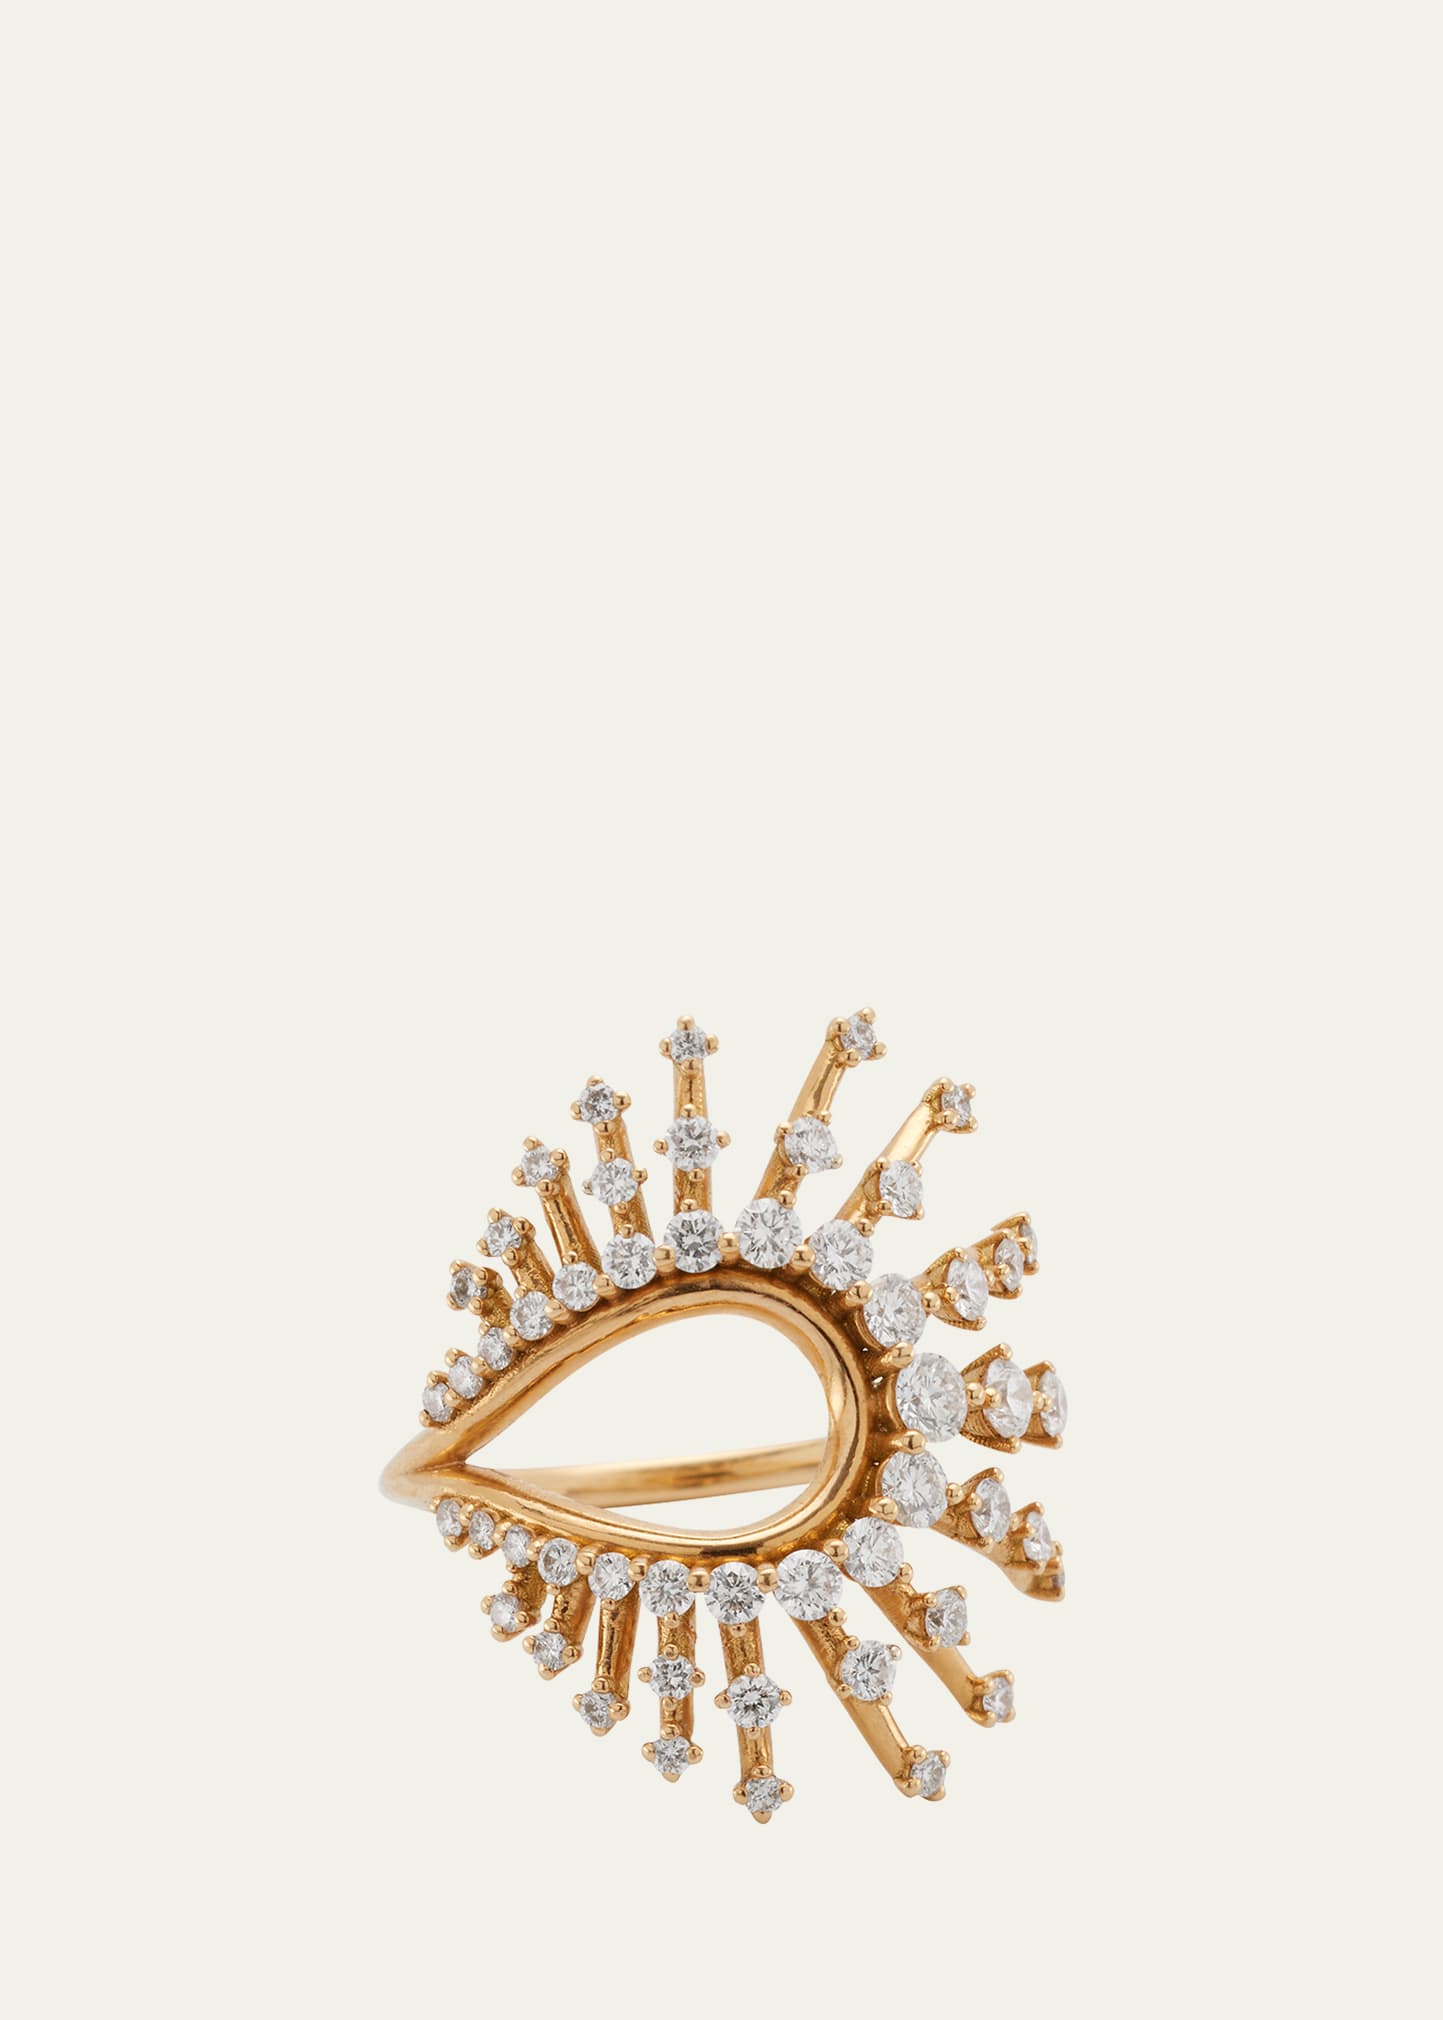 Fernando Jorge Clarity Diamond Ring in 18k Yellow Gold